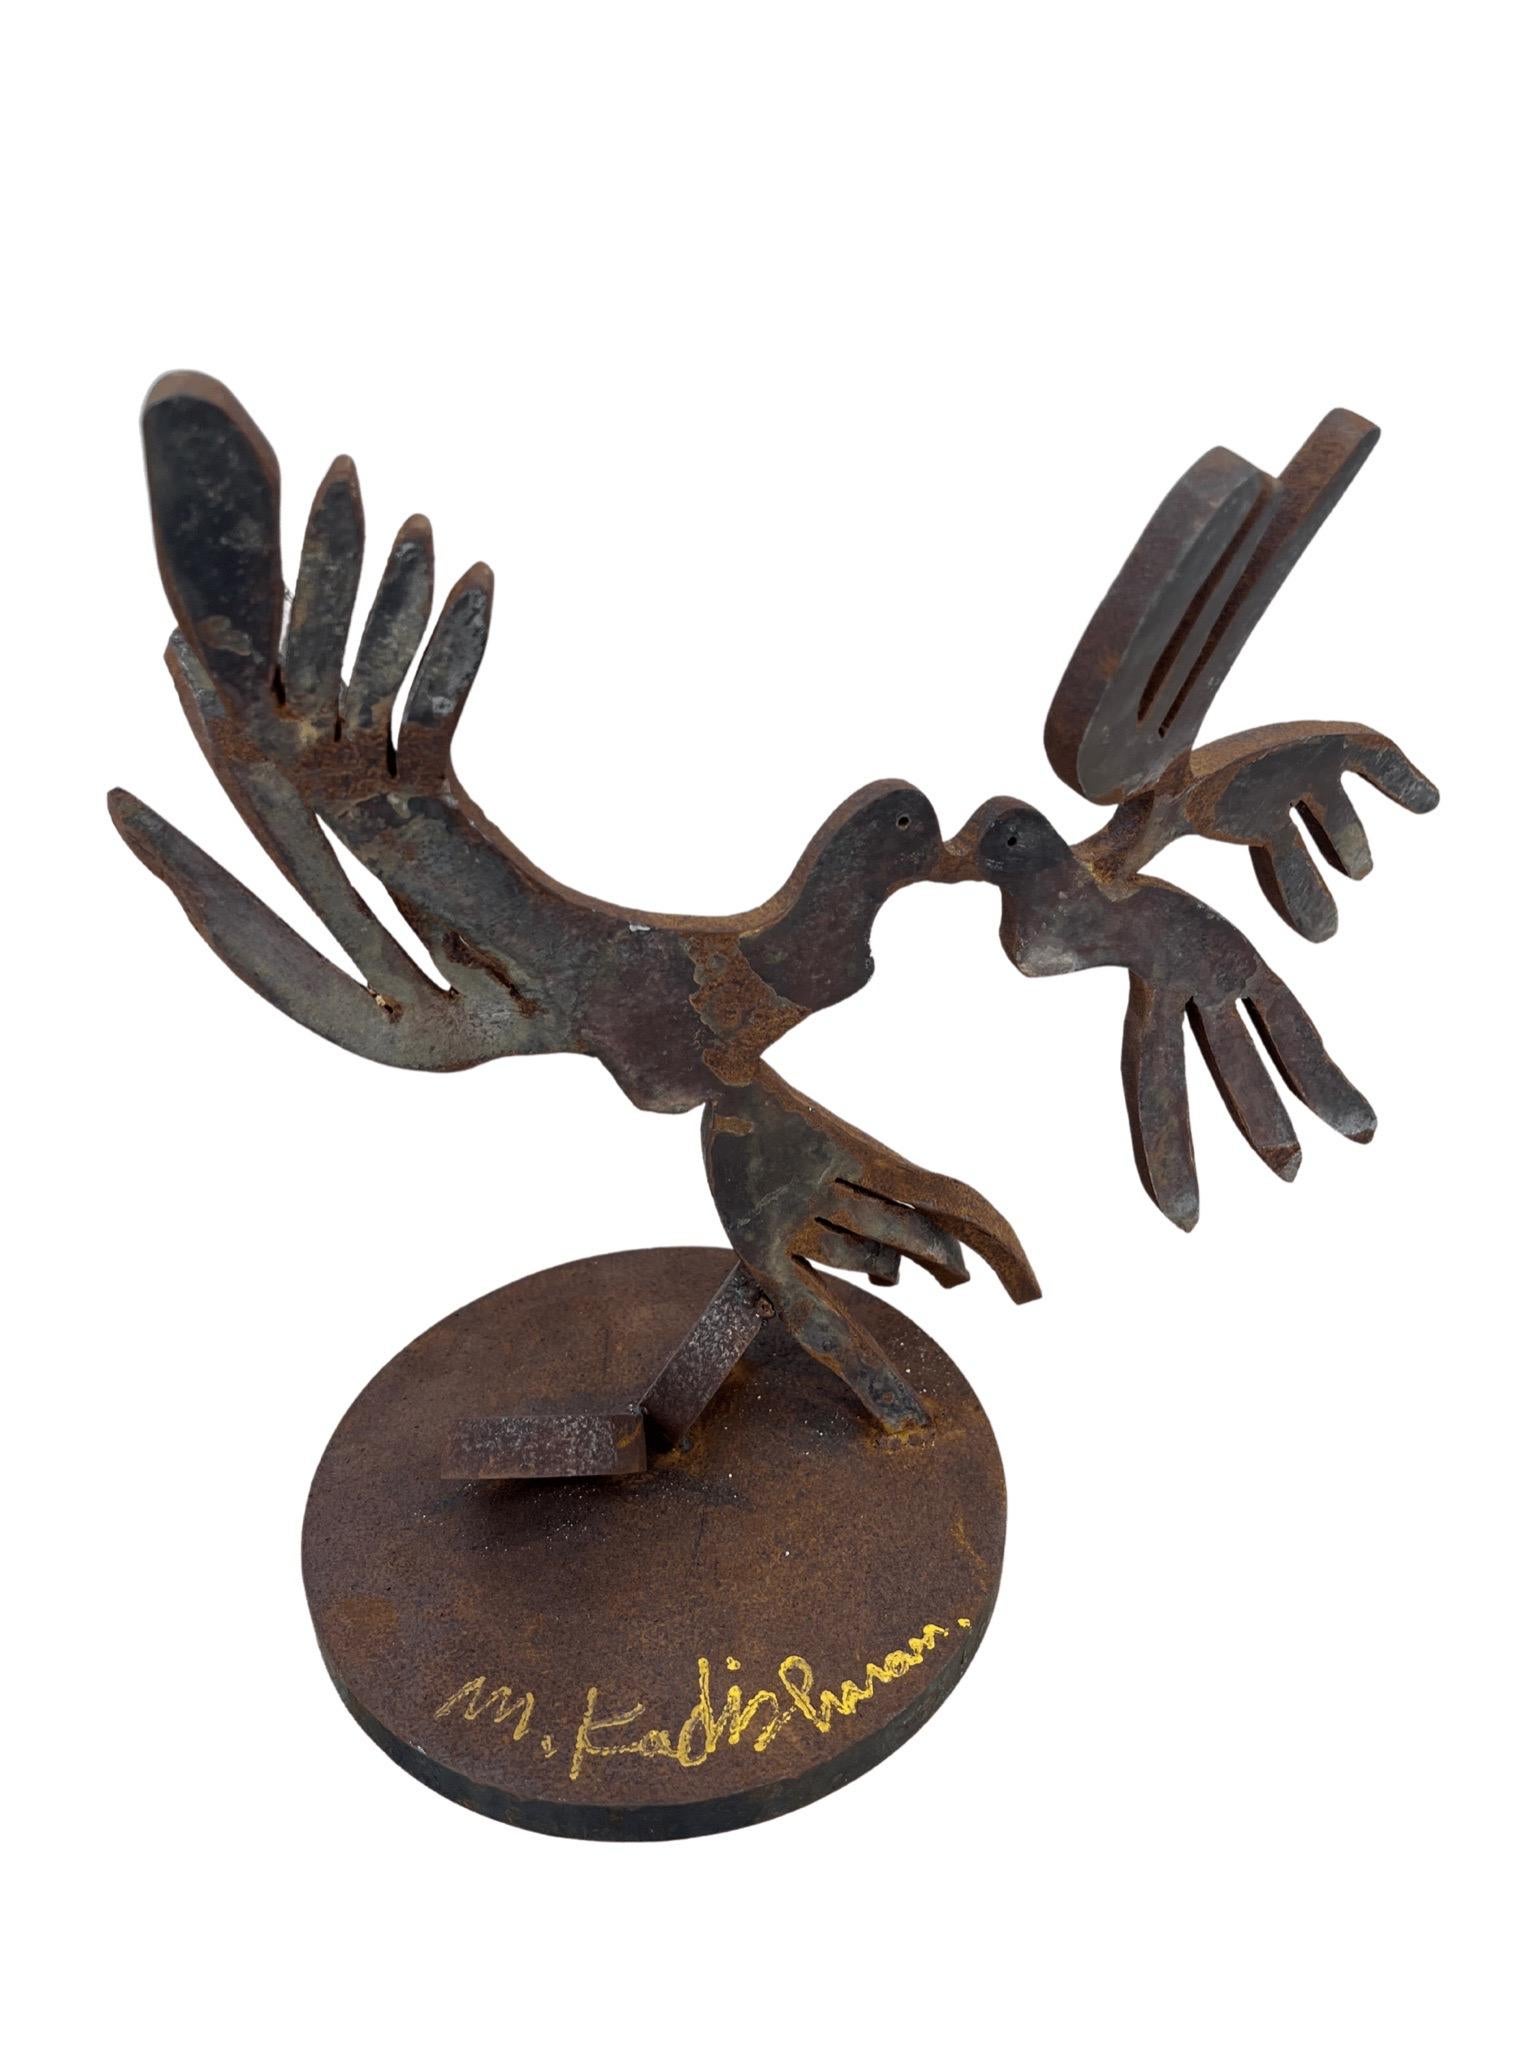 Birds Kiss figurative iron sculpture by the well know Israeli artist Kadishman  - Sculpture by Menashe Kadishman